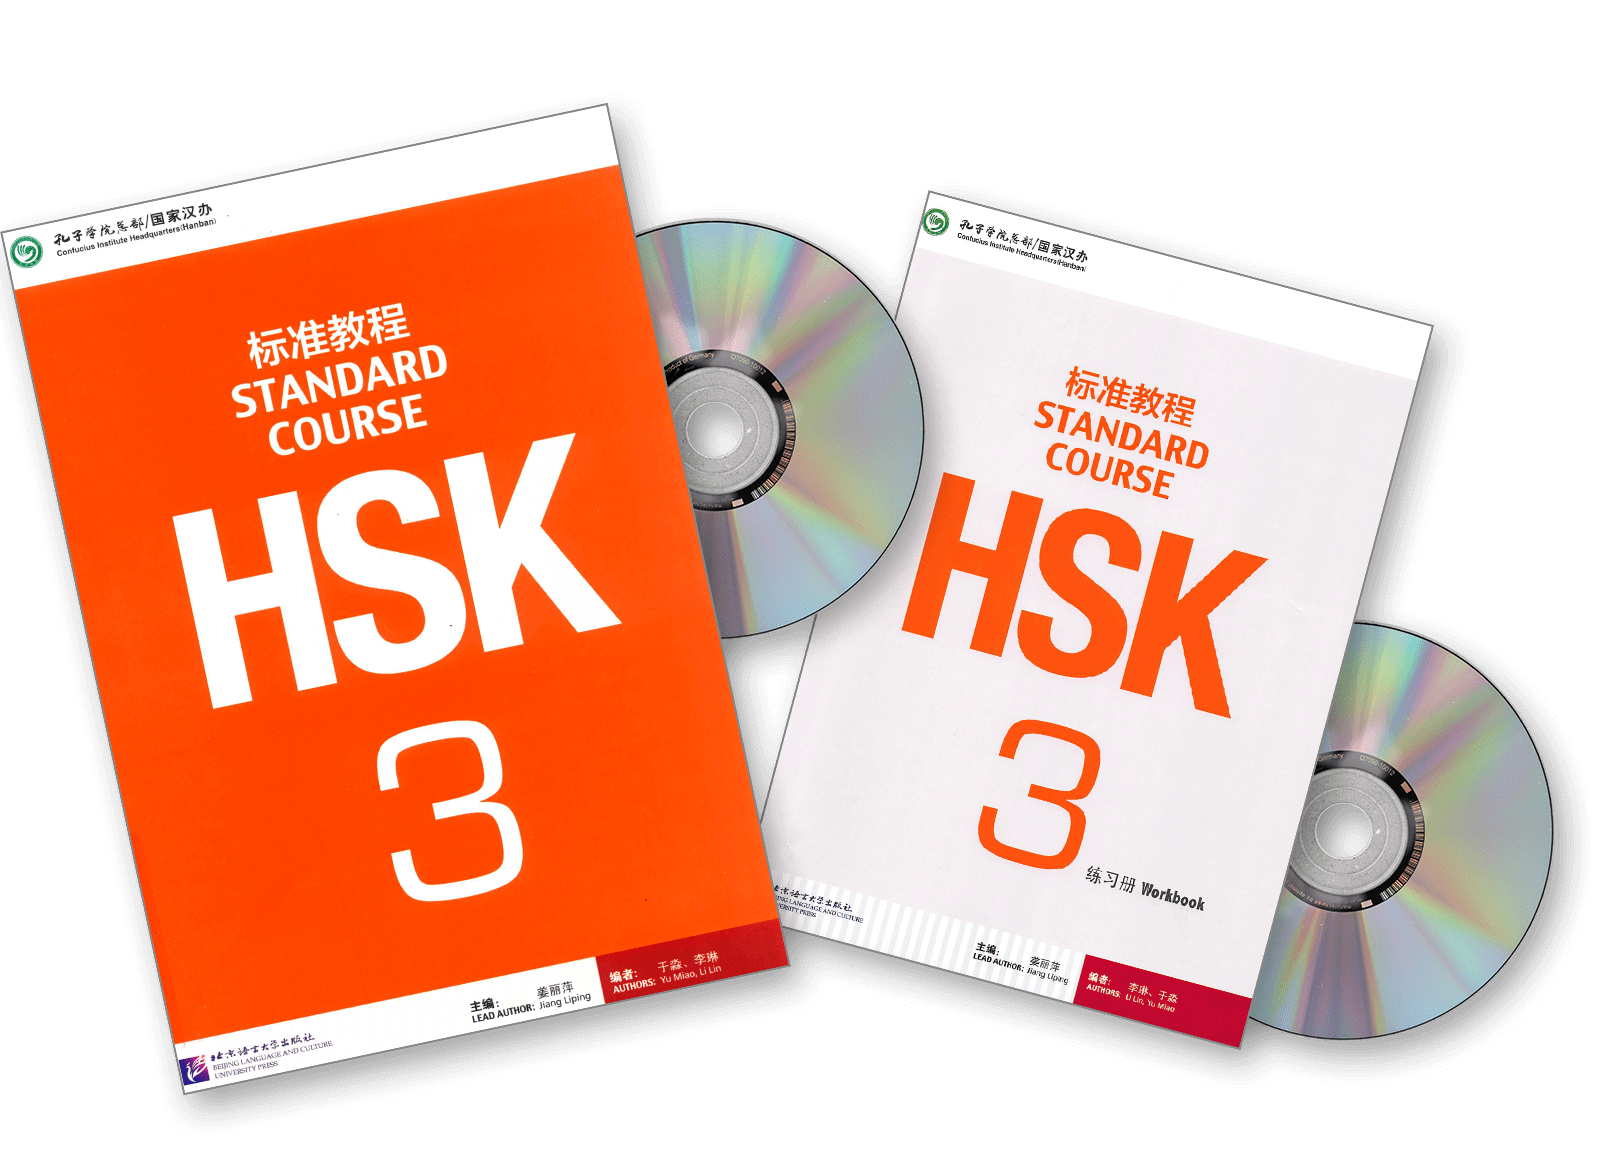 Wordwall hsk. Hsk1 Standard course pdf. HSK 3 Standard course. Standard course HSK 3 учебник. HSK Standard course 3 Workbook.